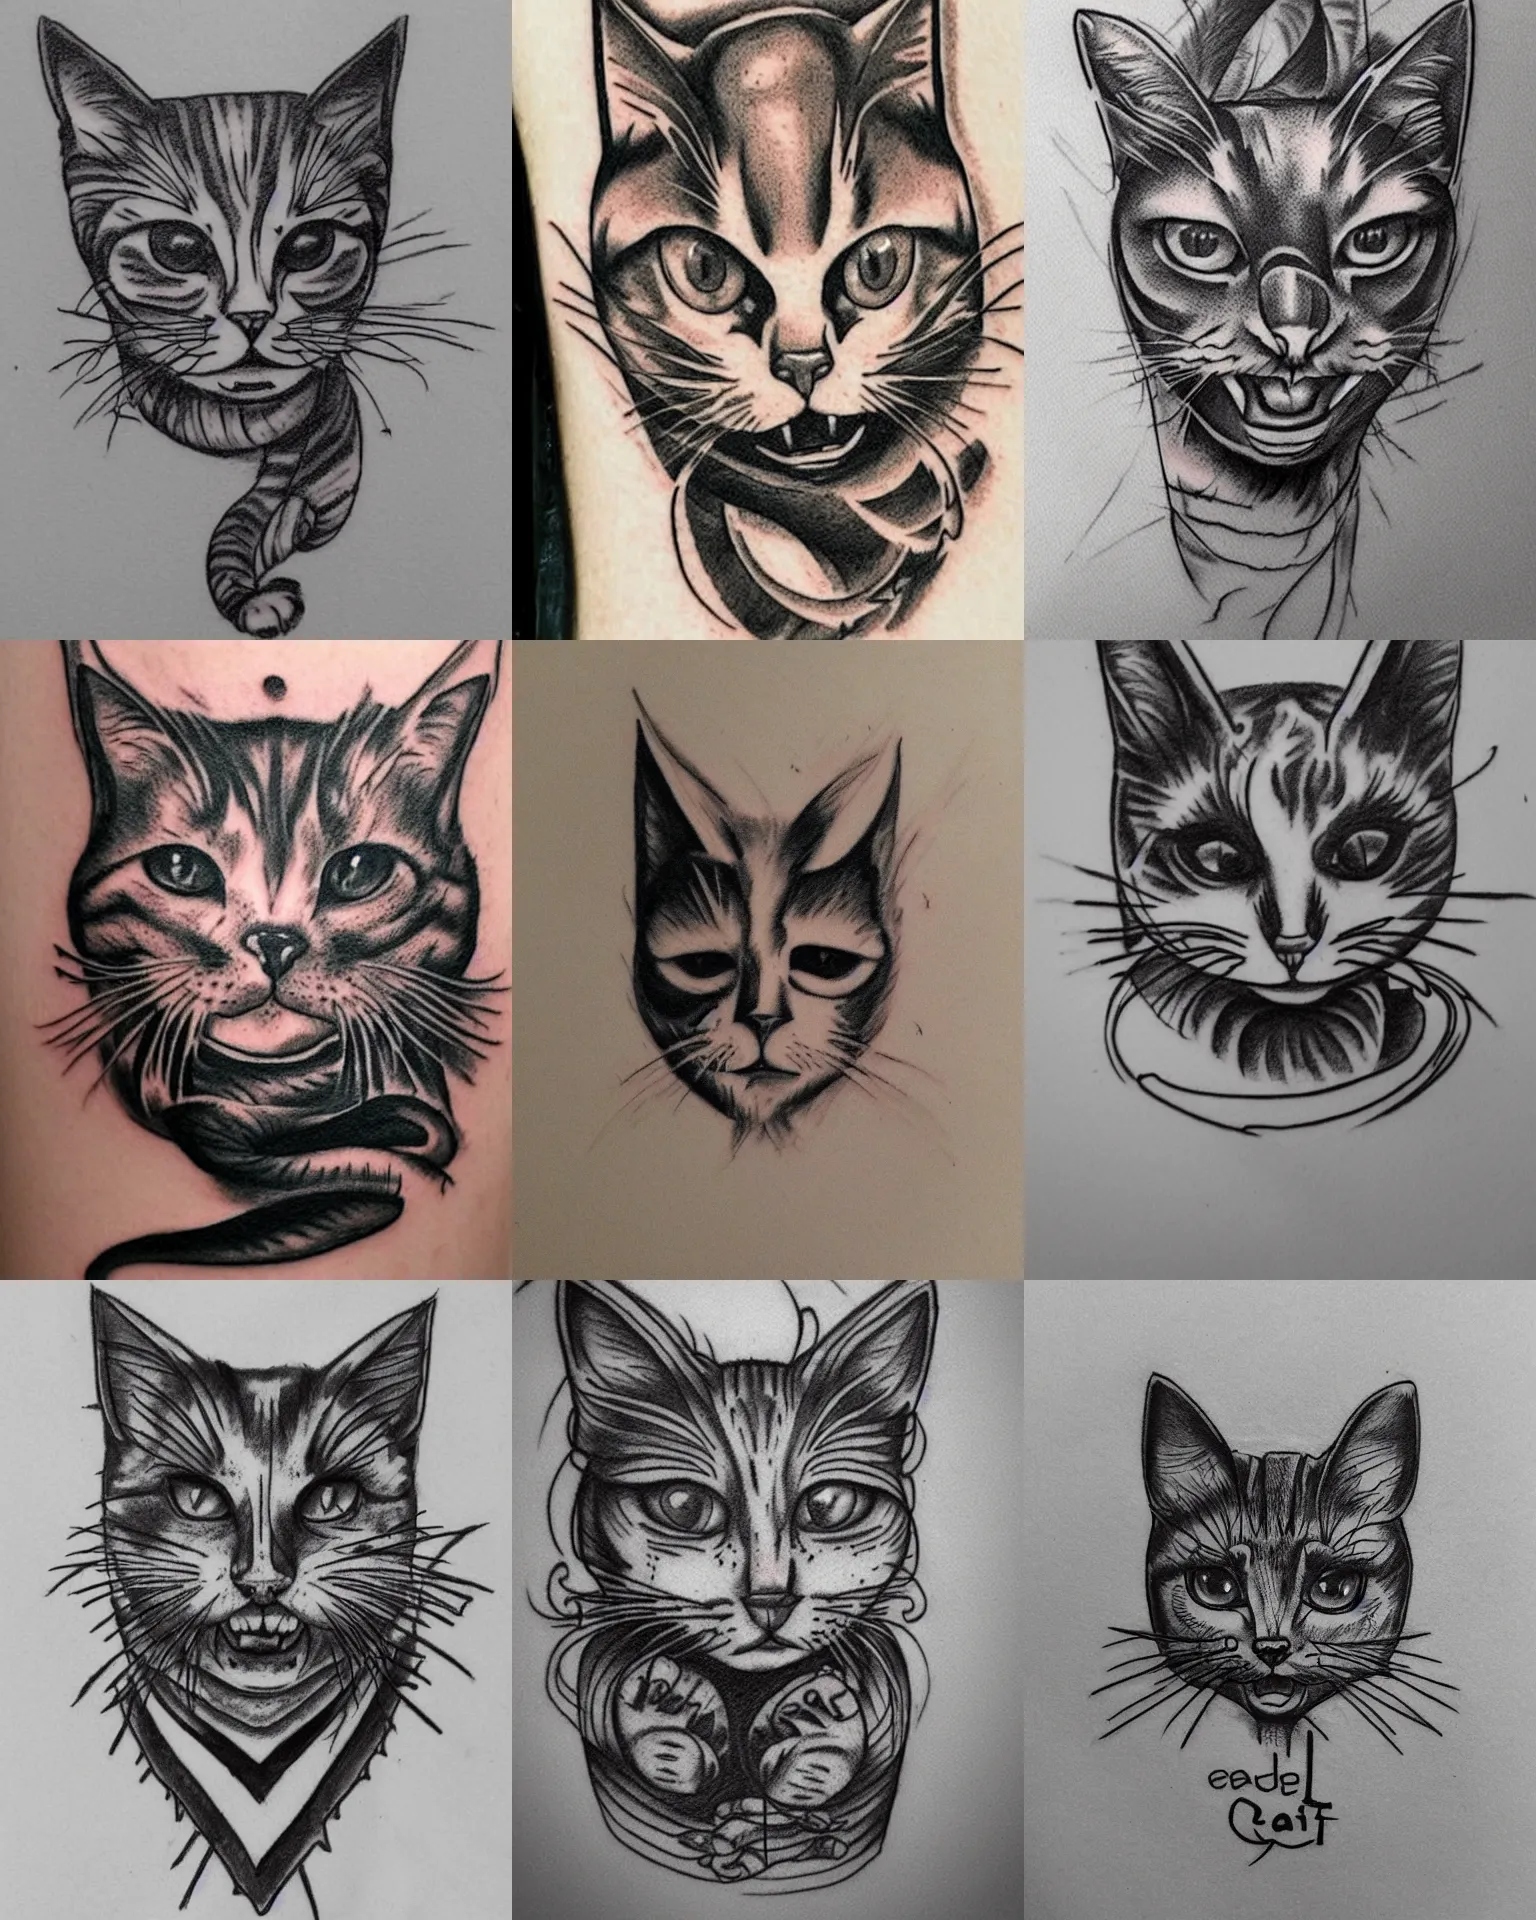 Prompt: evil cat tattoo sketch